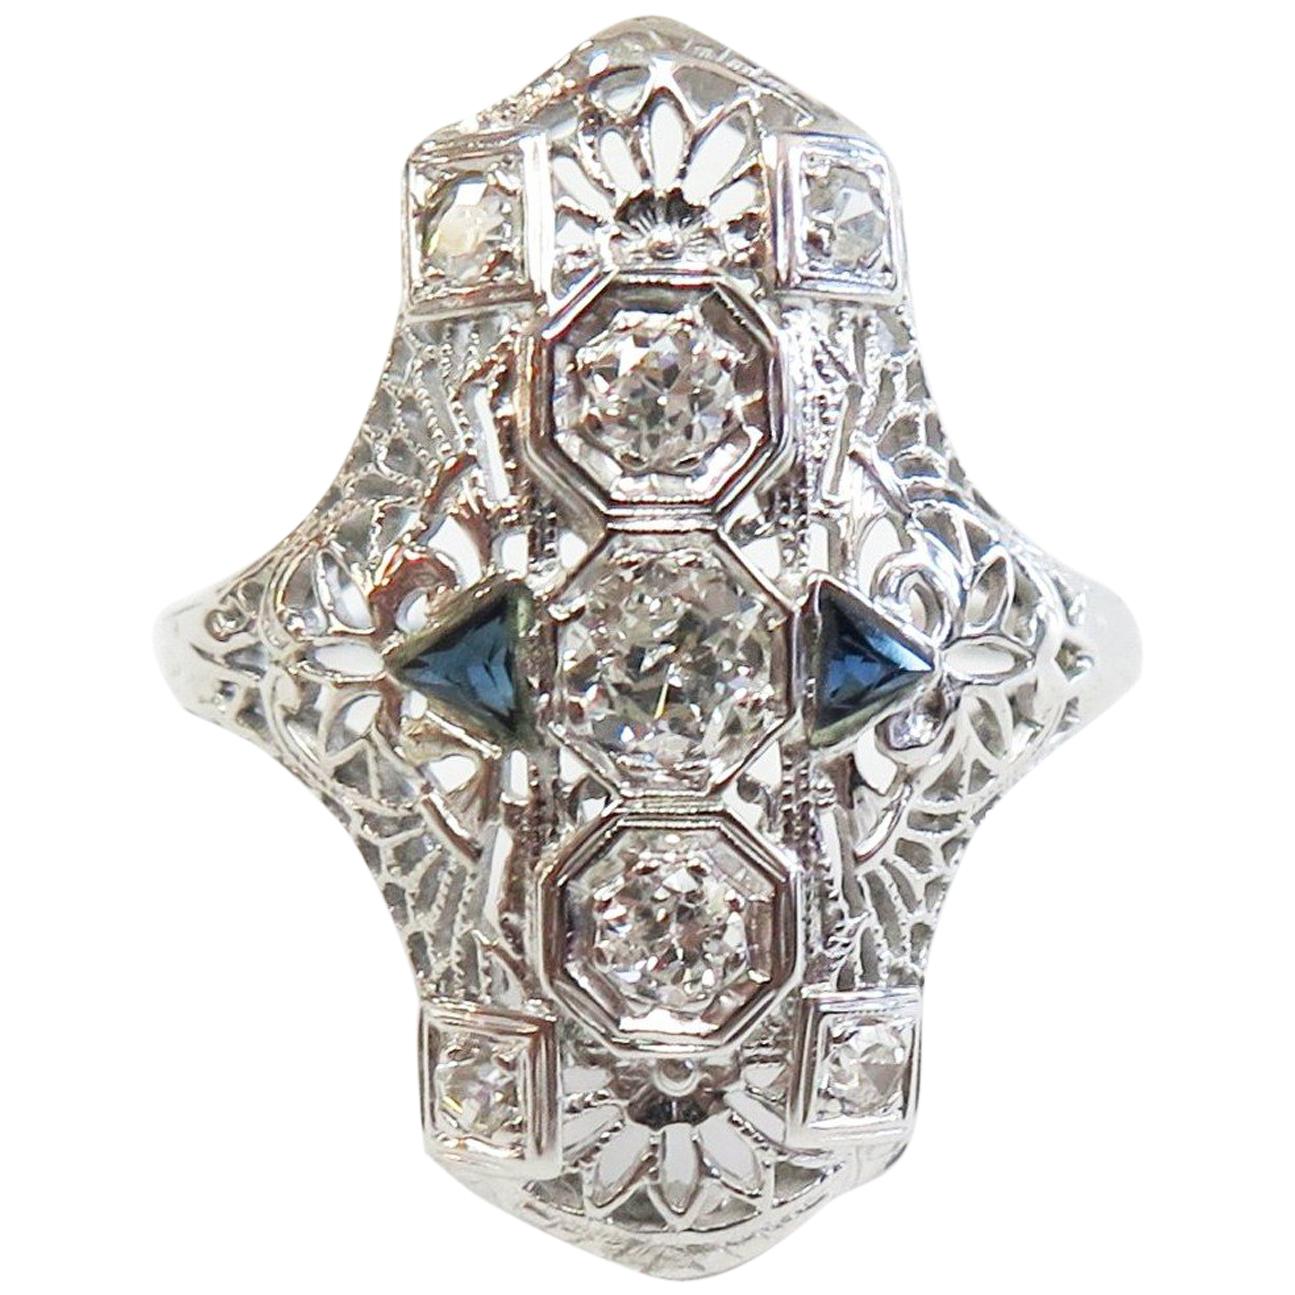 Art Deco Filigree Ring with Diamonds and Sapphires, 18 Karat White Gold